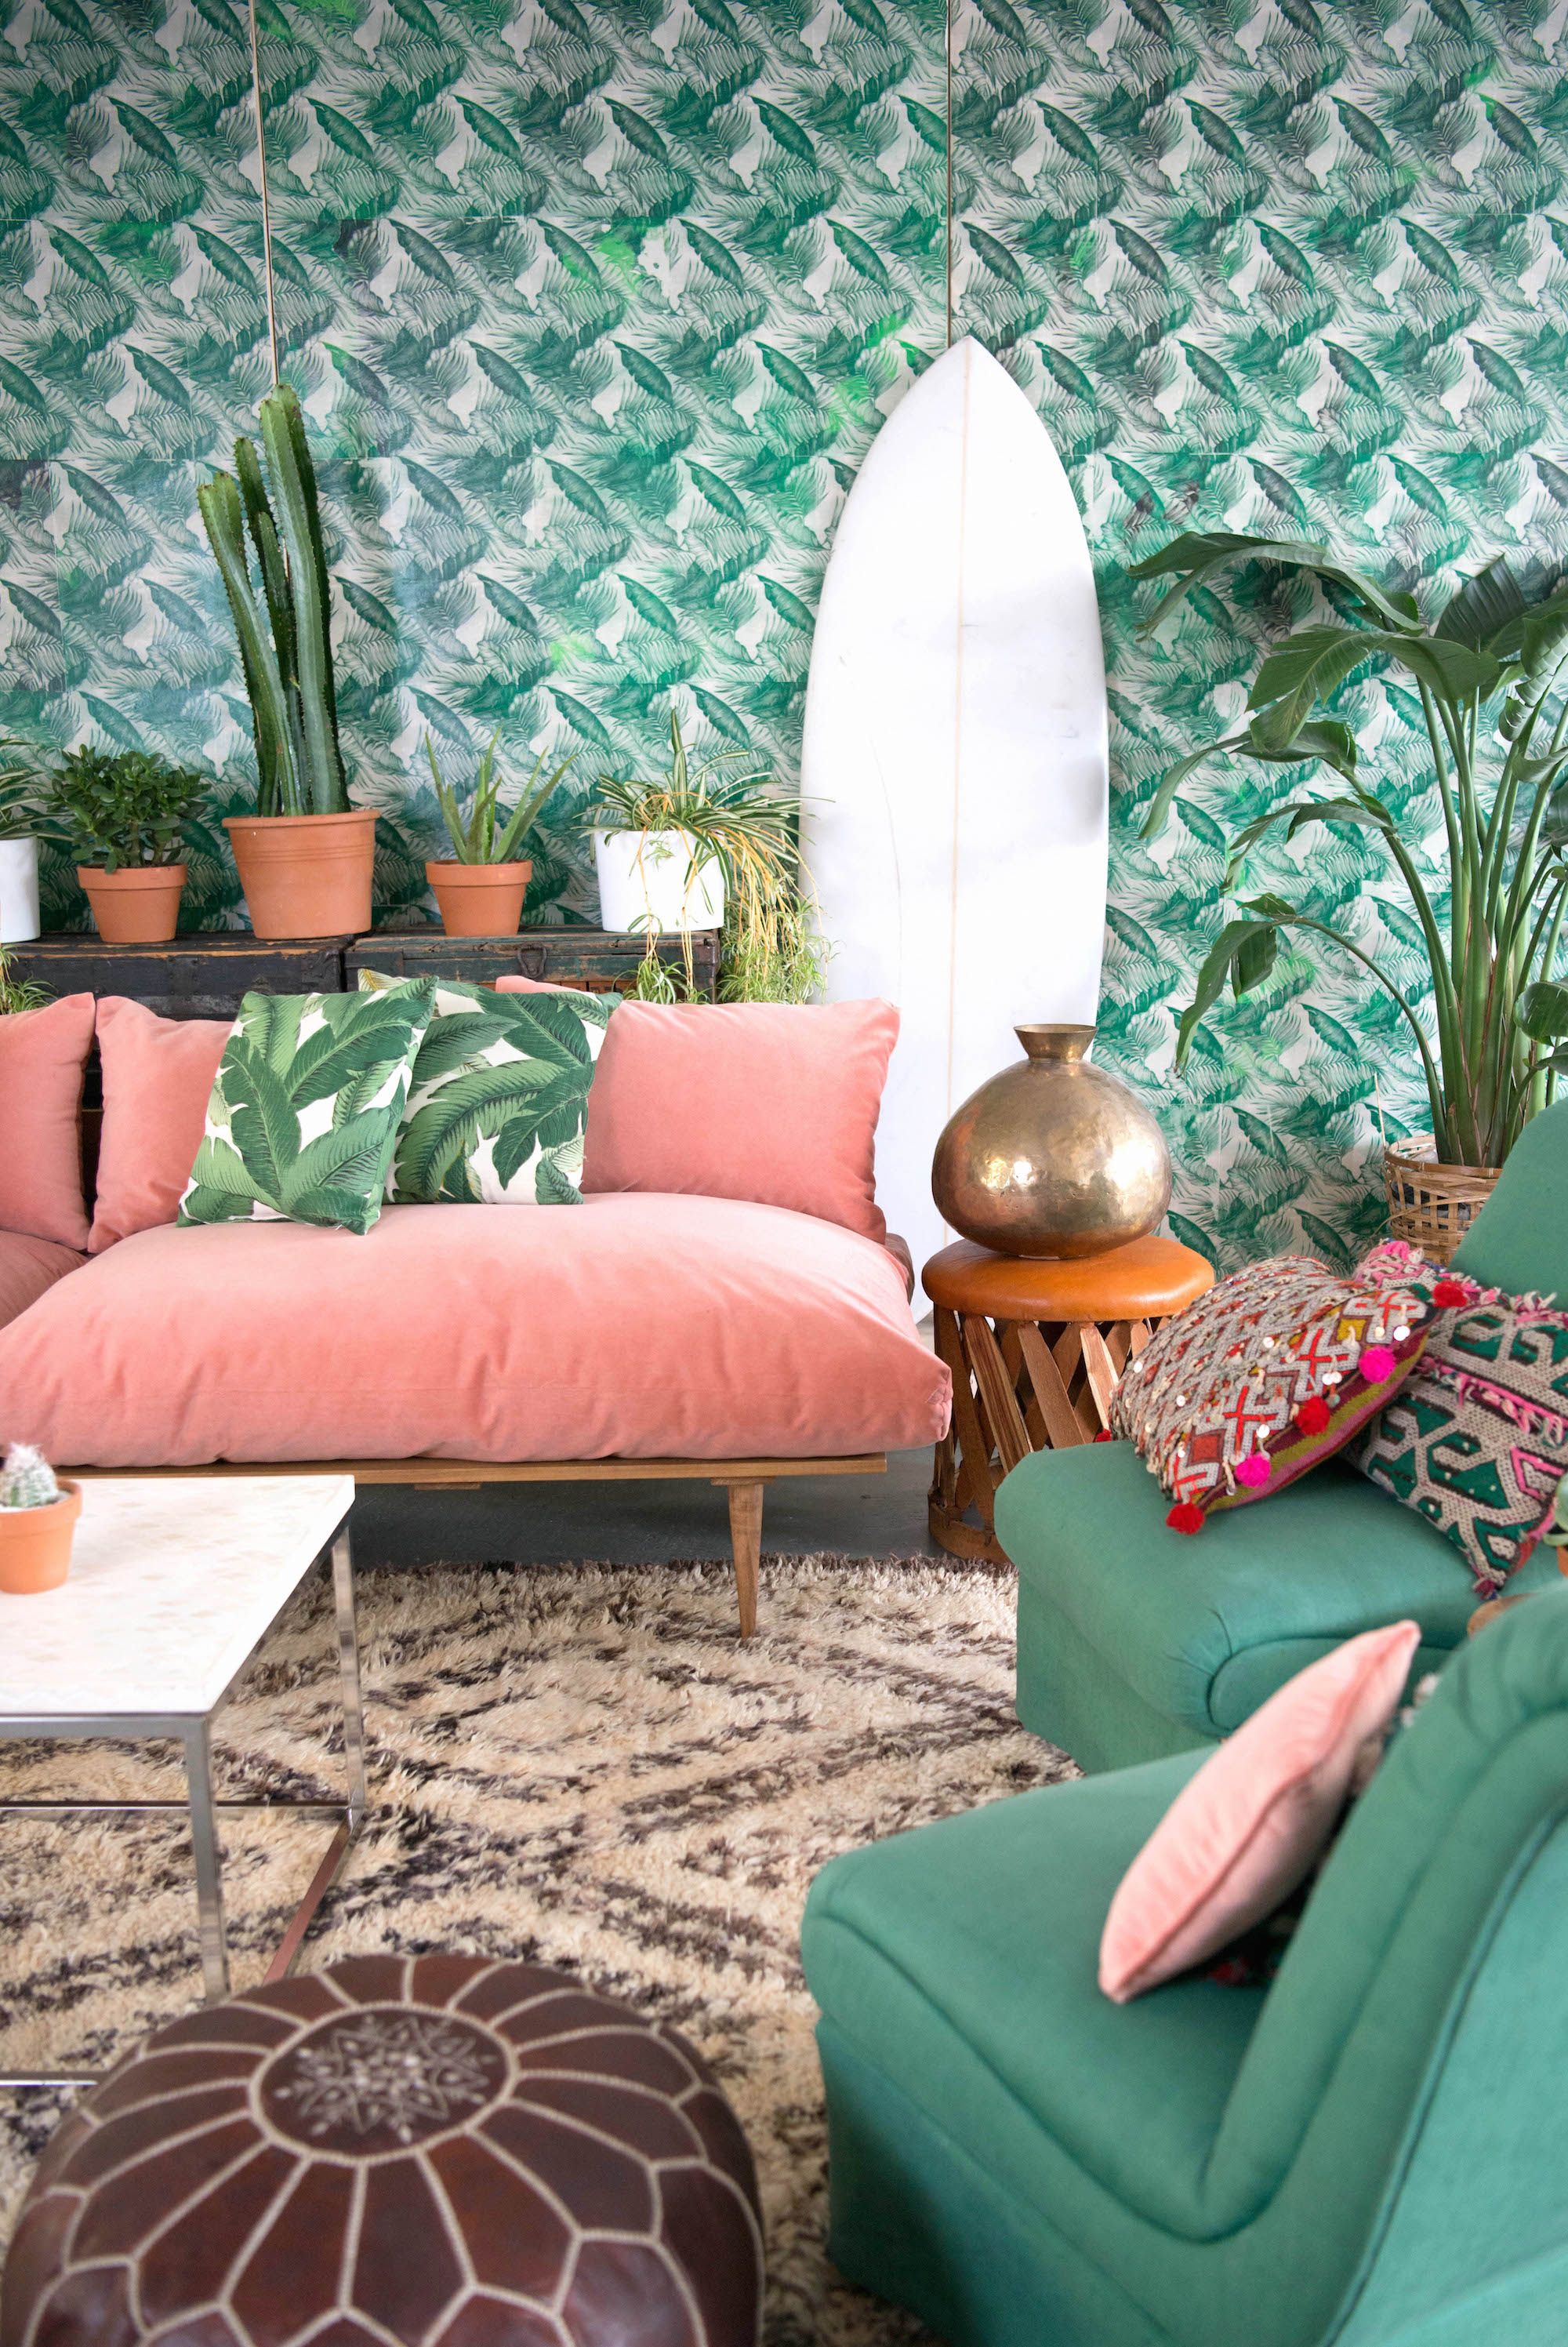 Millennial Pink interior design